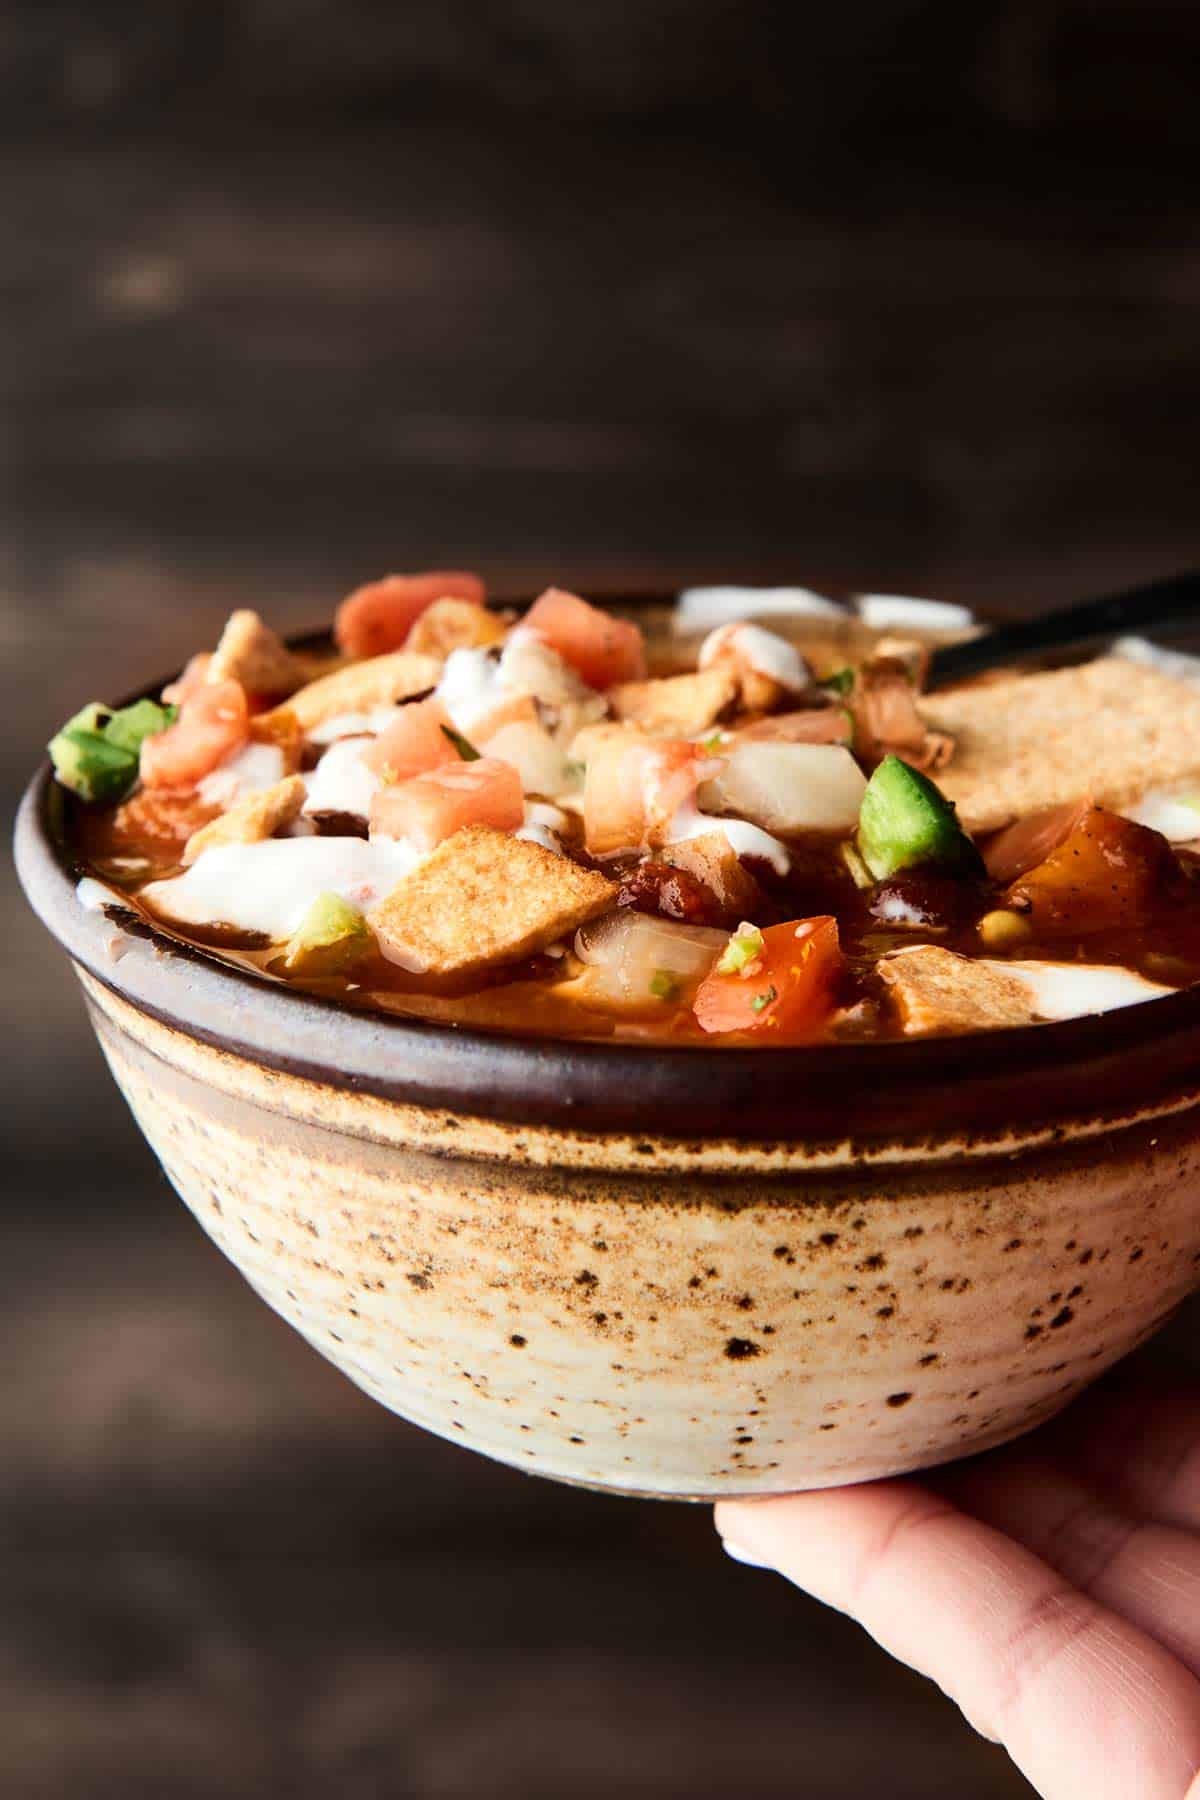 Bowl of vegetarian chili held